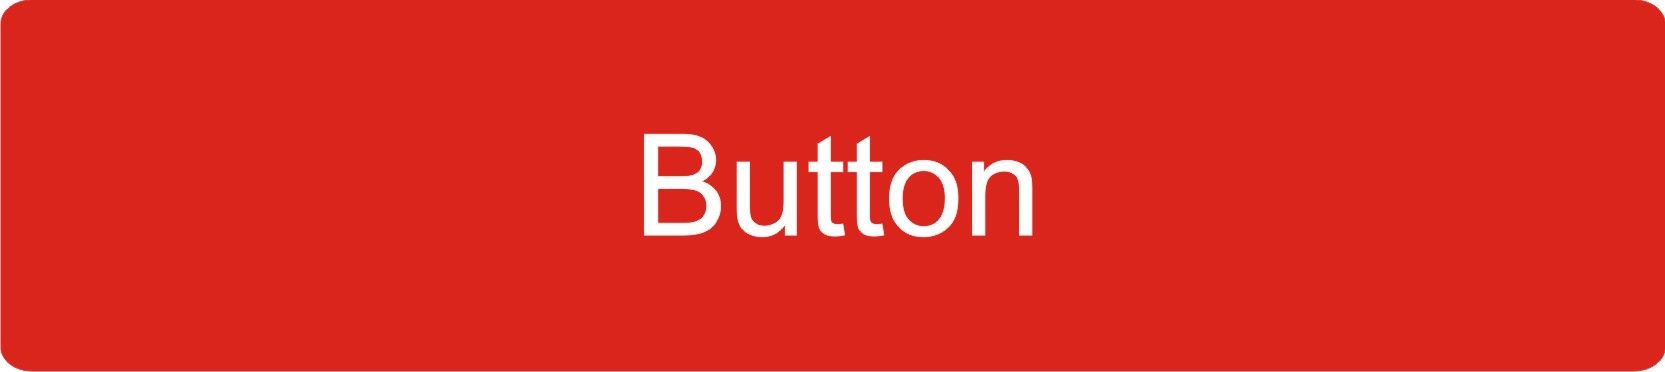 A basic button